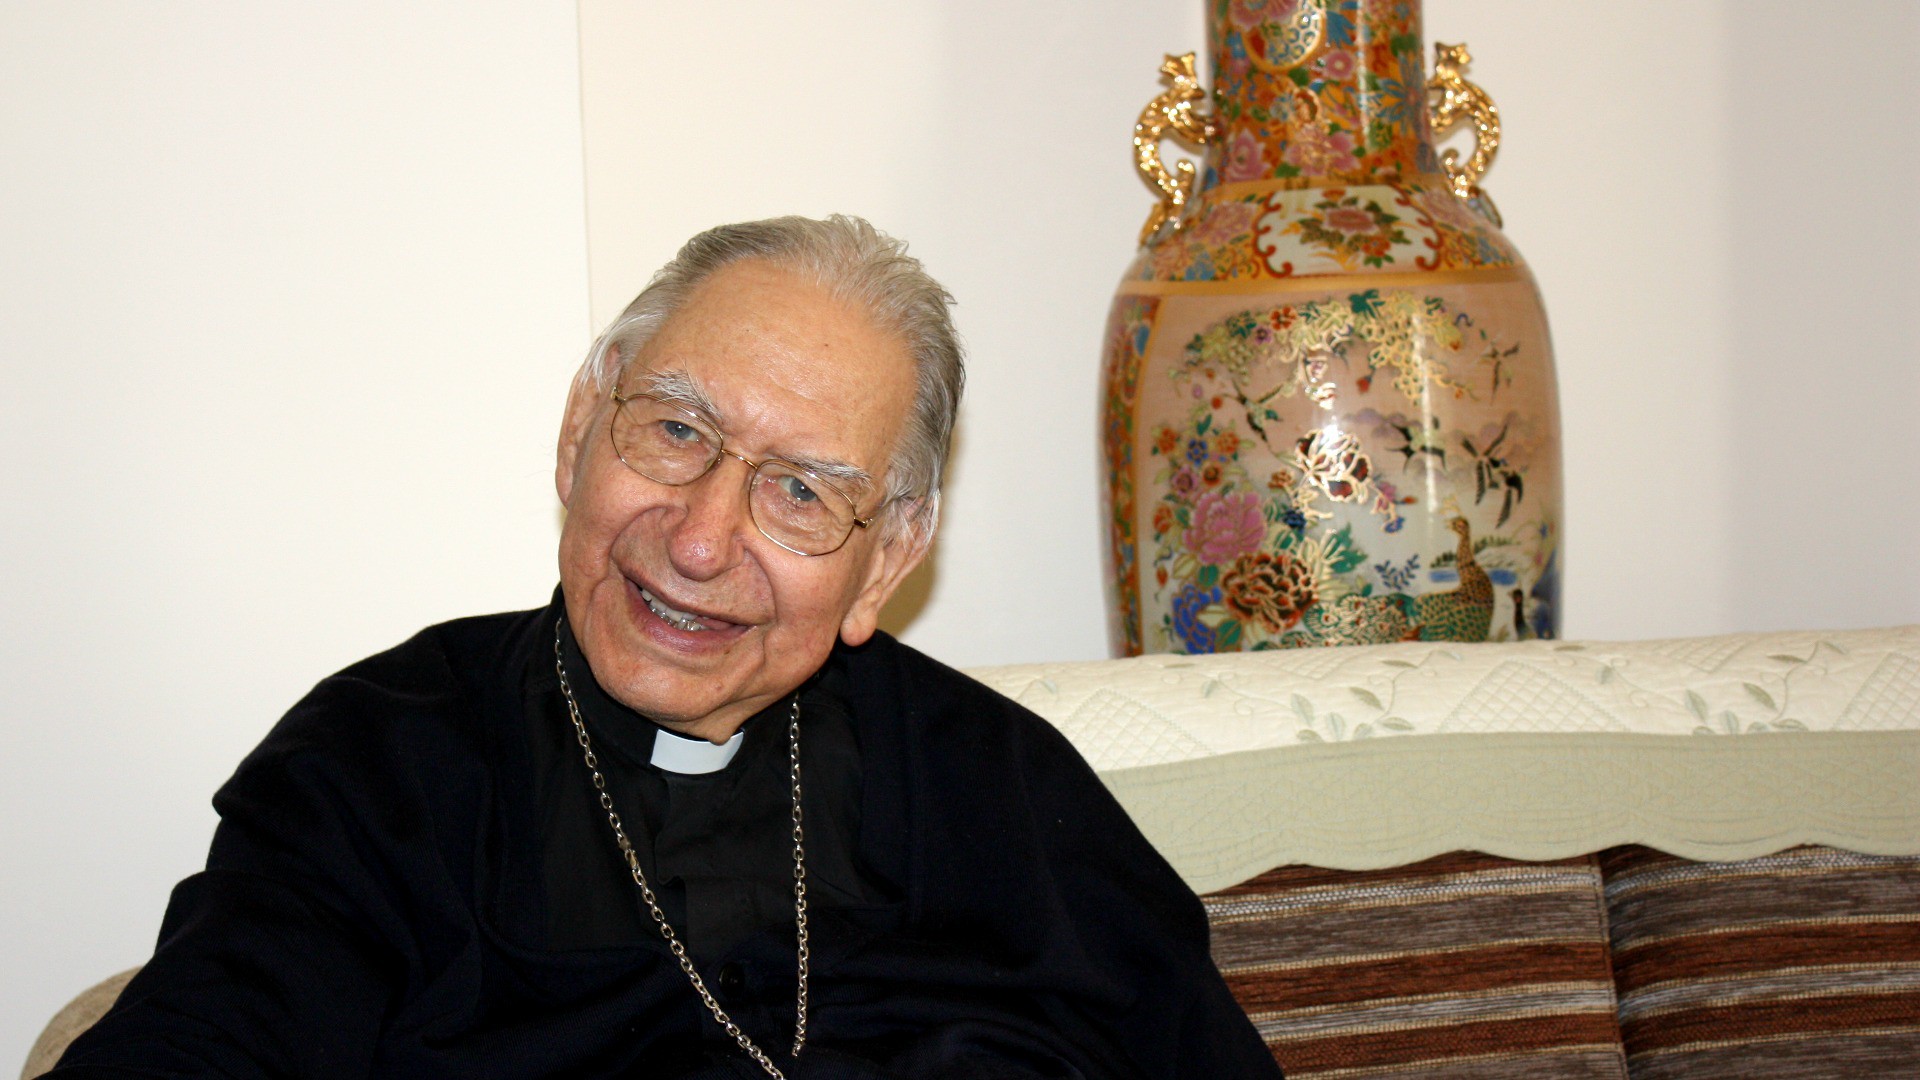 Le cardinal Georges Cottier se réjouit de la prochaine Année sainte de la Miséricorde (Photo:Bernard Bovigny, 2010)